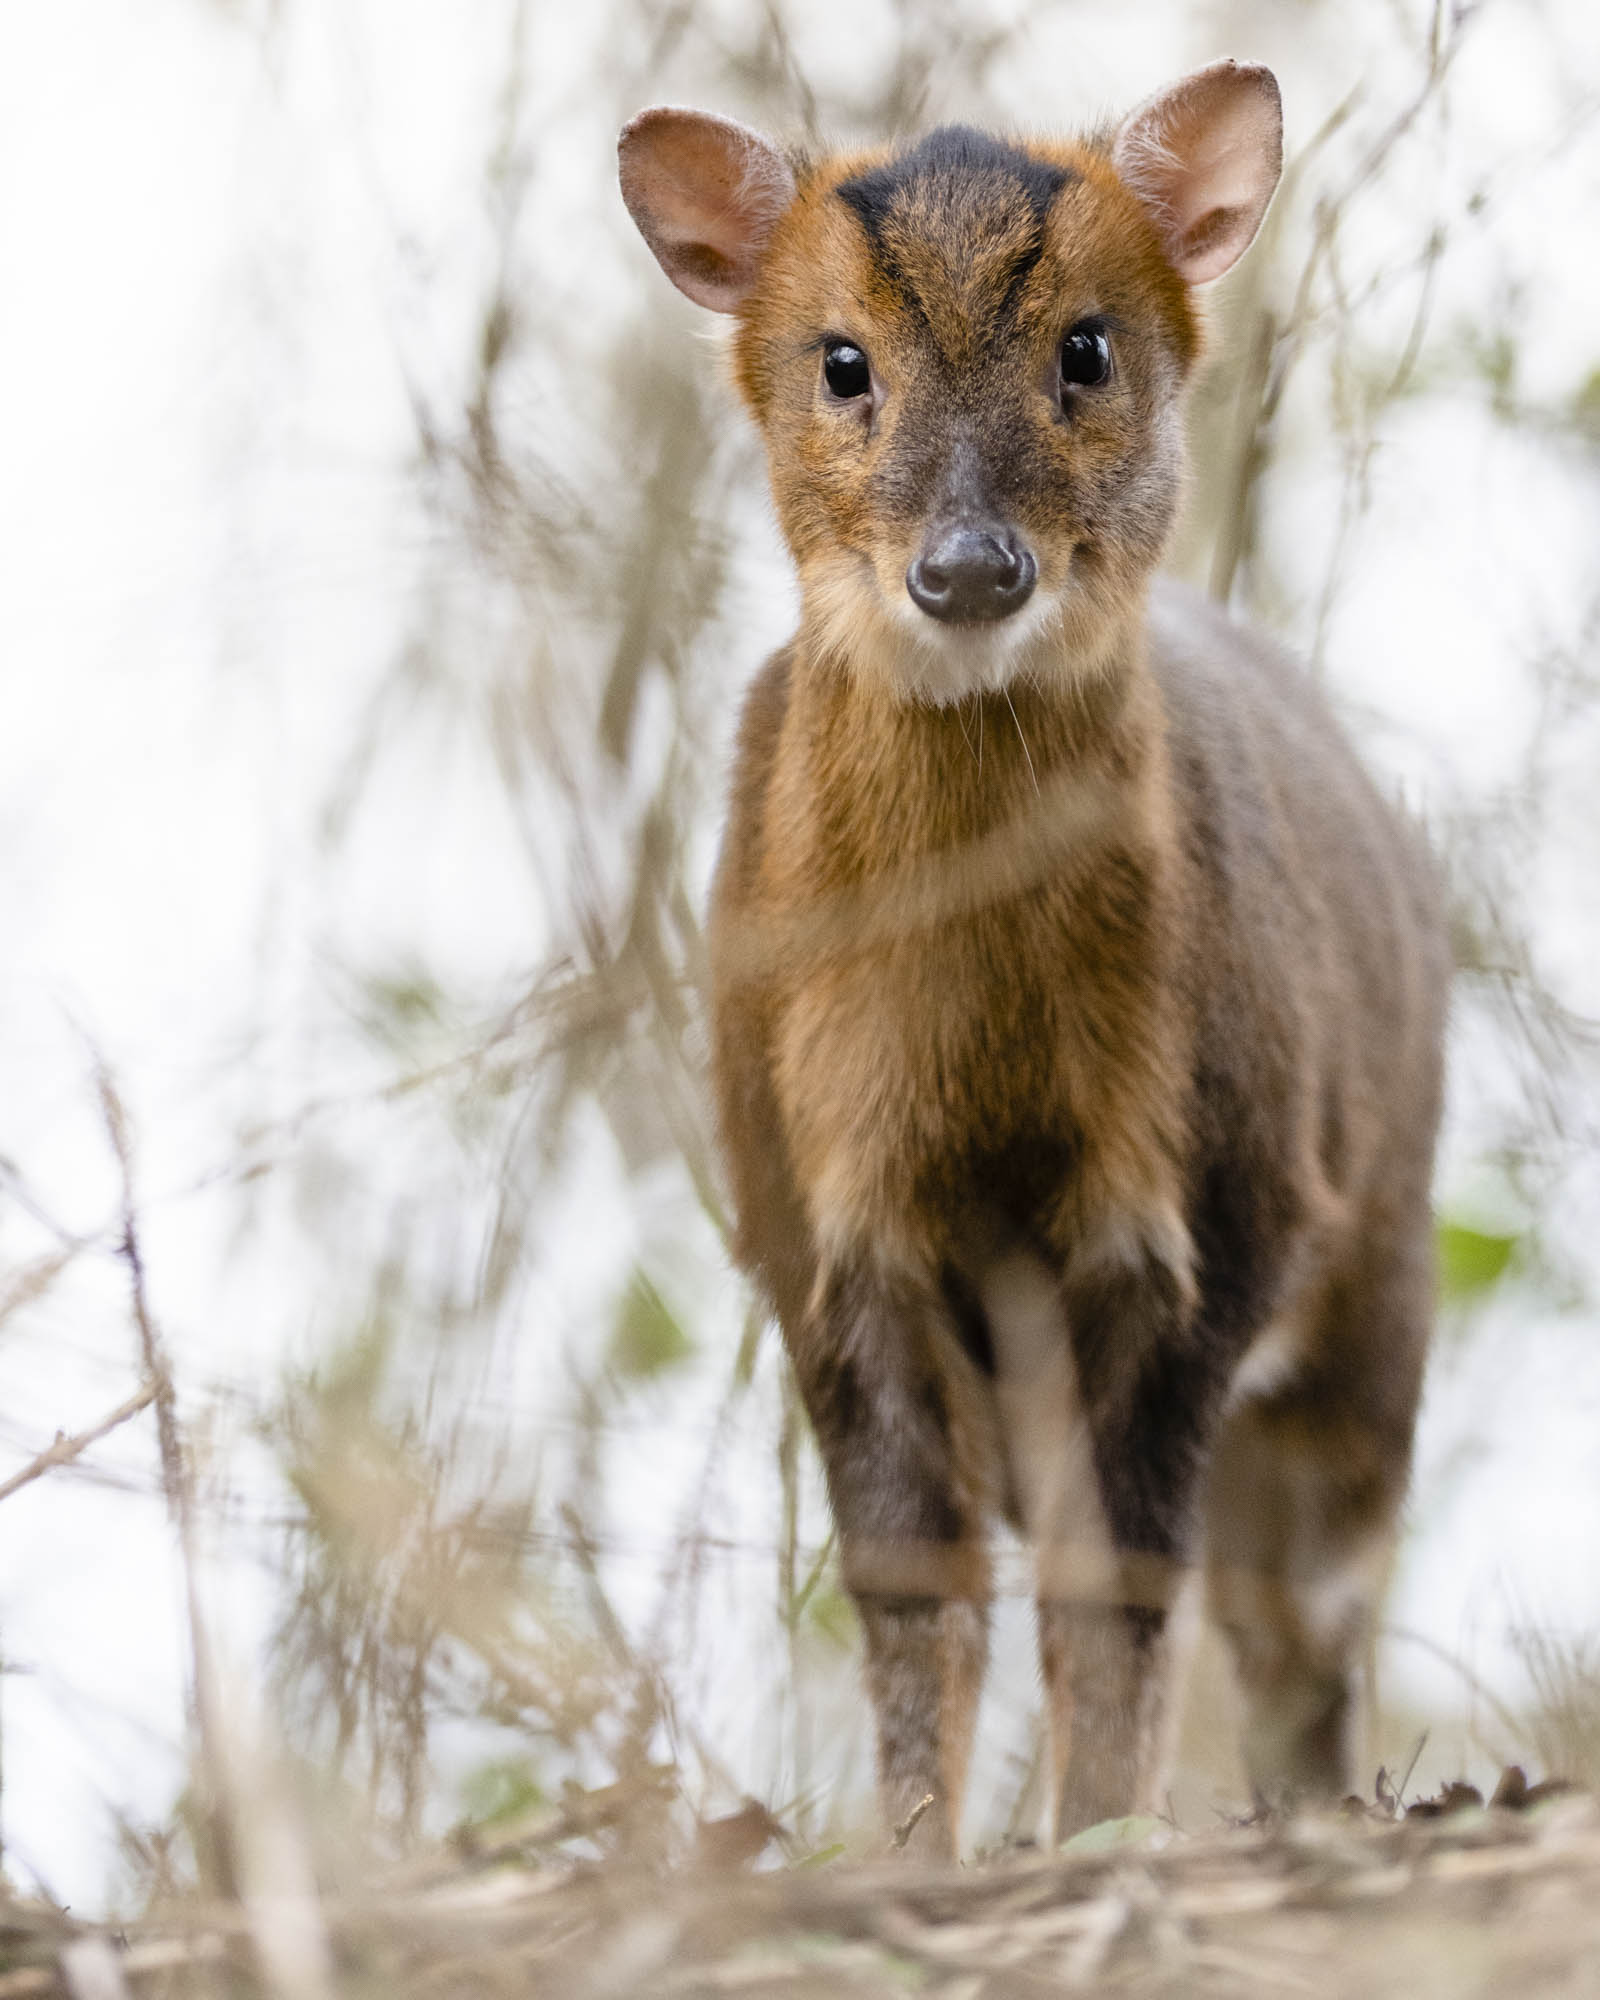 small deer-like animal staring at the camera lens